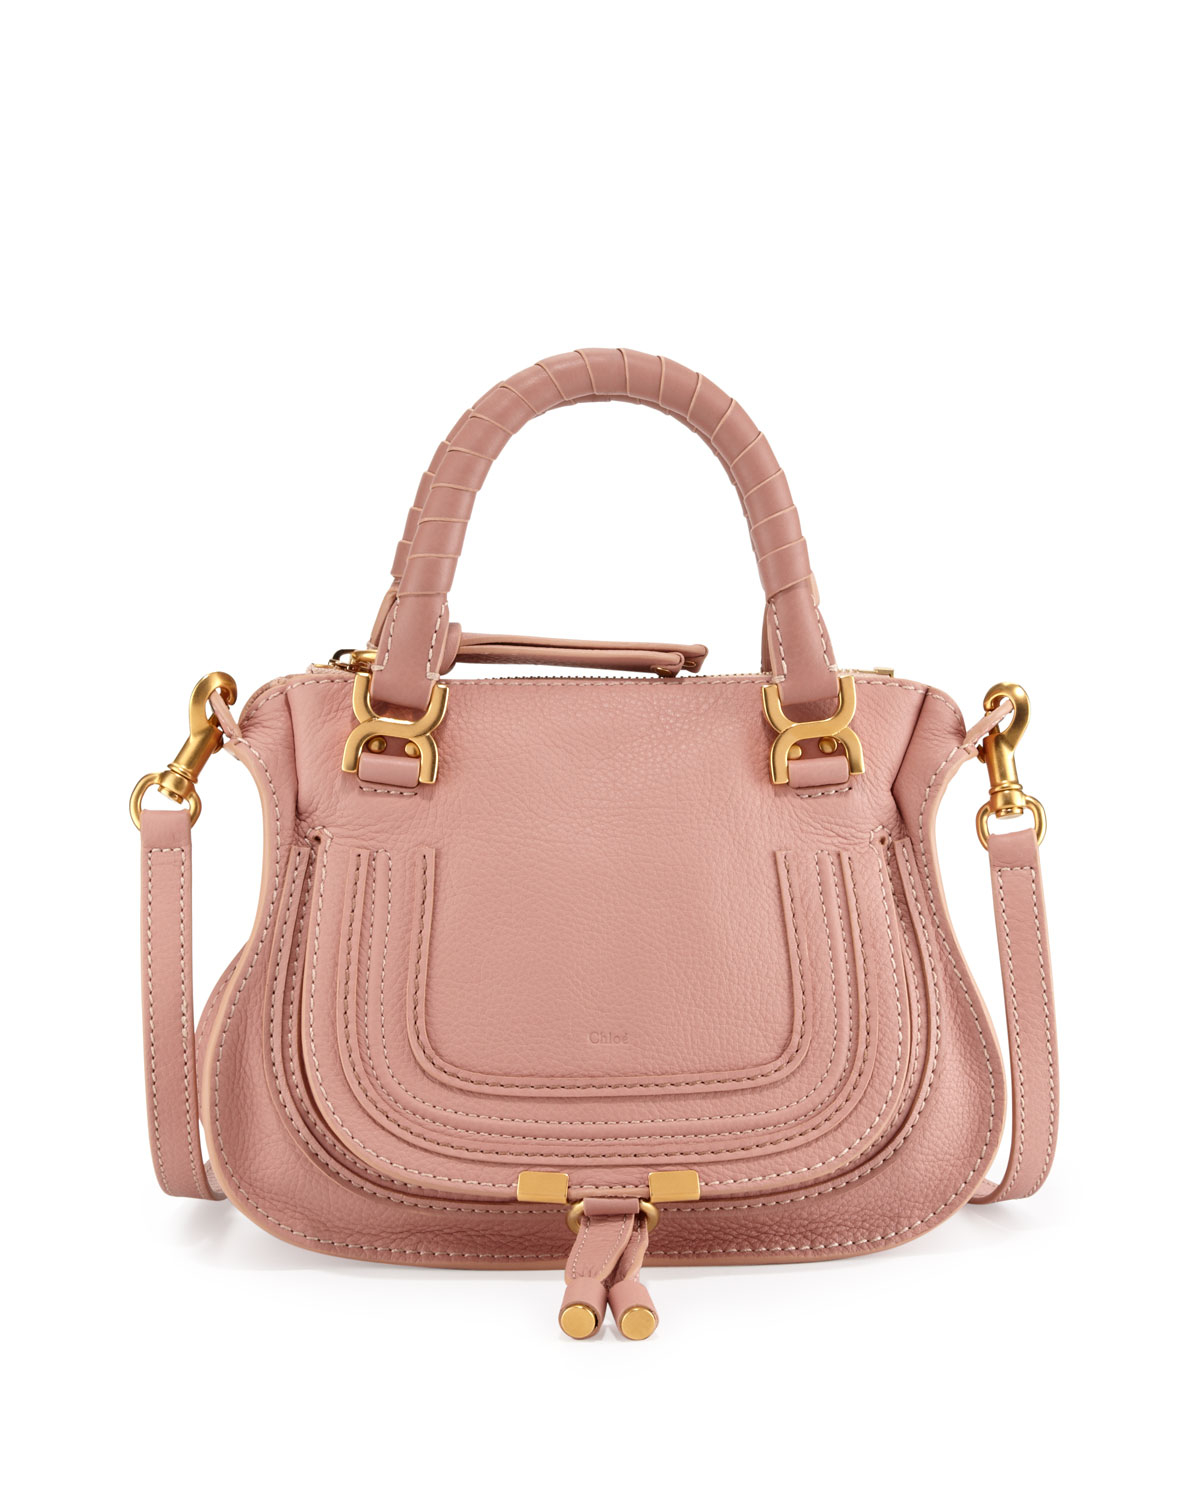 Lyst - Chloé Marcie Mini Shoulder Bag in Pink